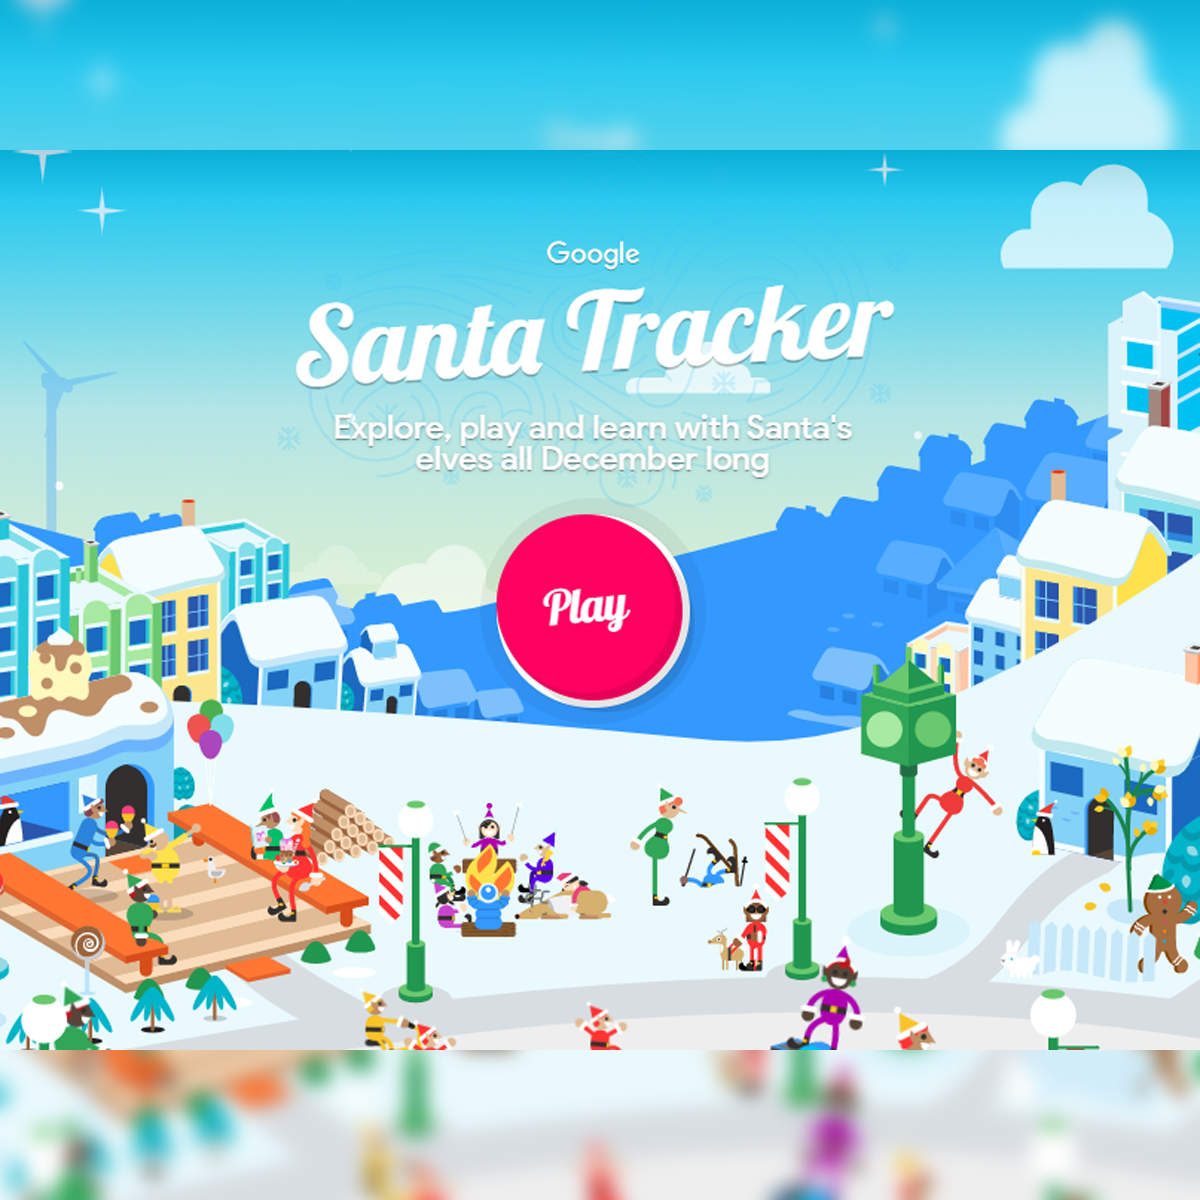 Merry Christmas: Google spreads holiday cheer: Santa Tracker